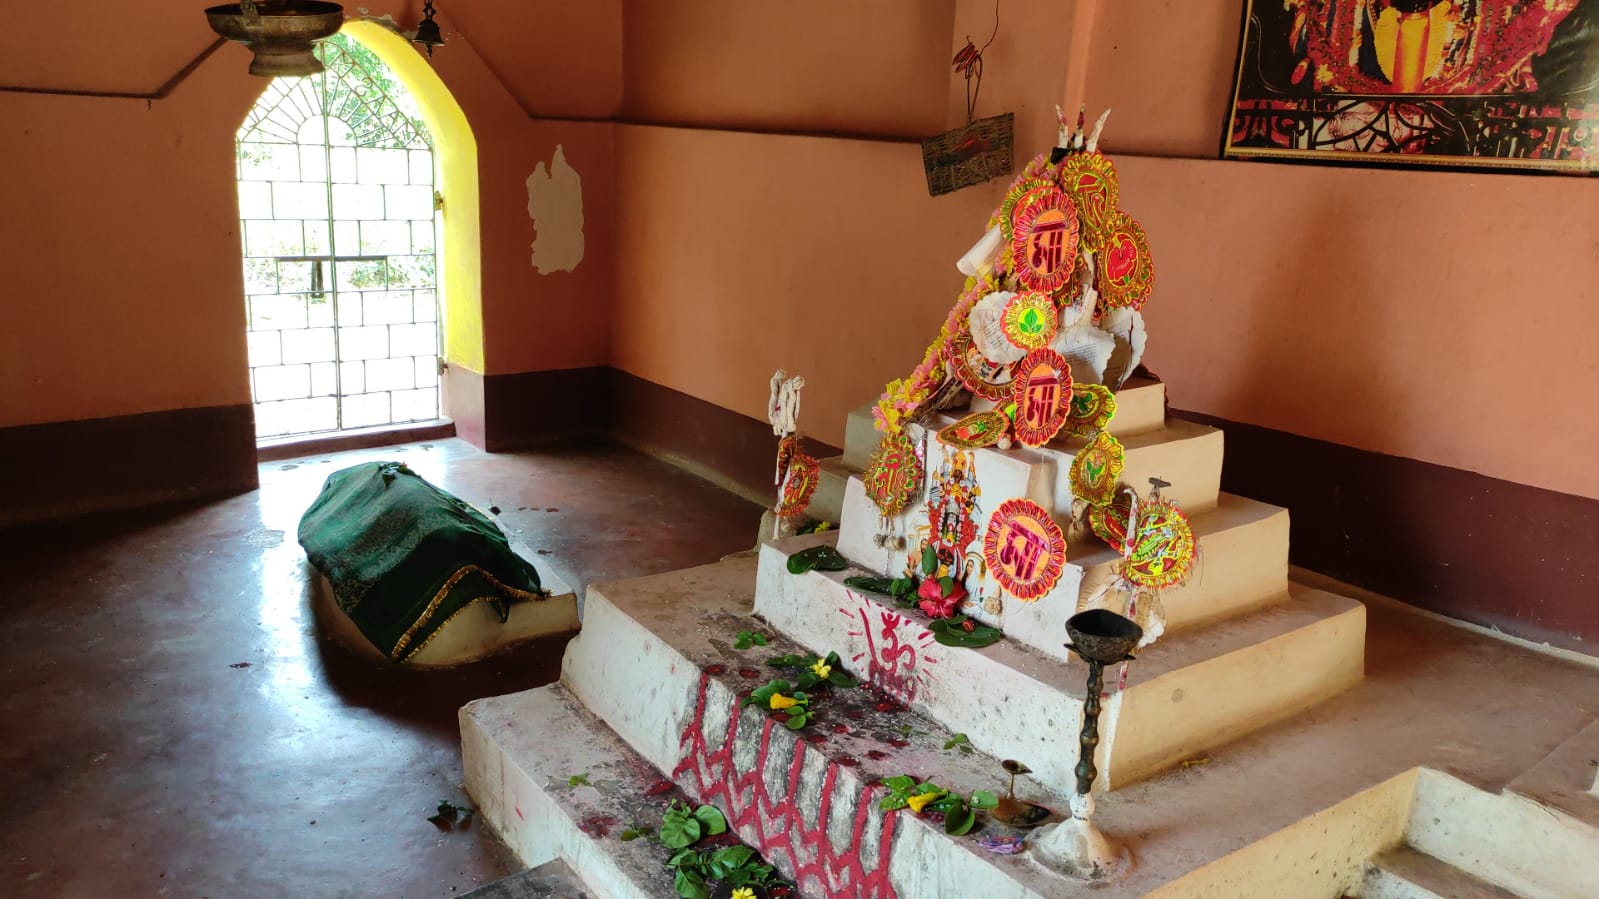 Kali Puja 2021: একইসঙ্গে ভদ্রকালী ও পীর বাবার আরাধনা, ৫০০ বছর ধরে সাম্প্রদায়িক সম্প্রীতির বার্তা বয়ে আনছে হিড়বহাল গ্রাম